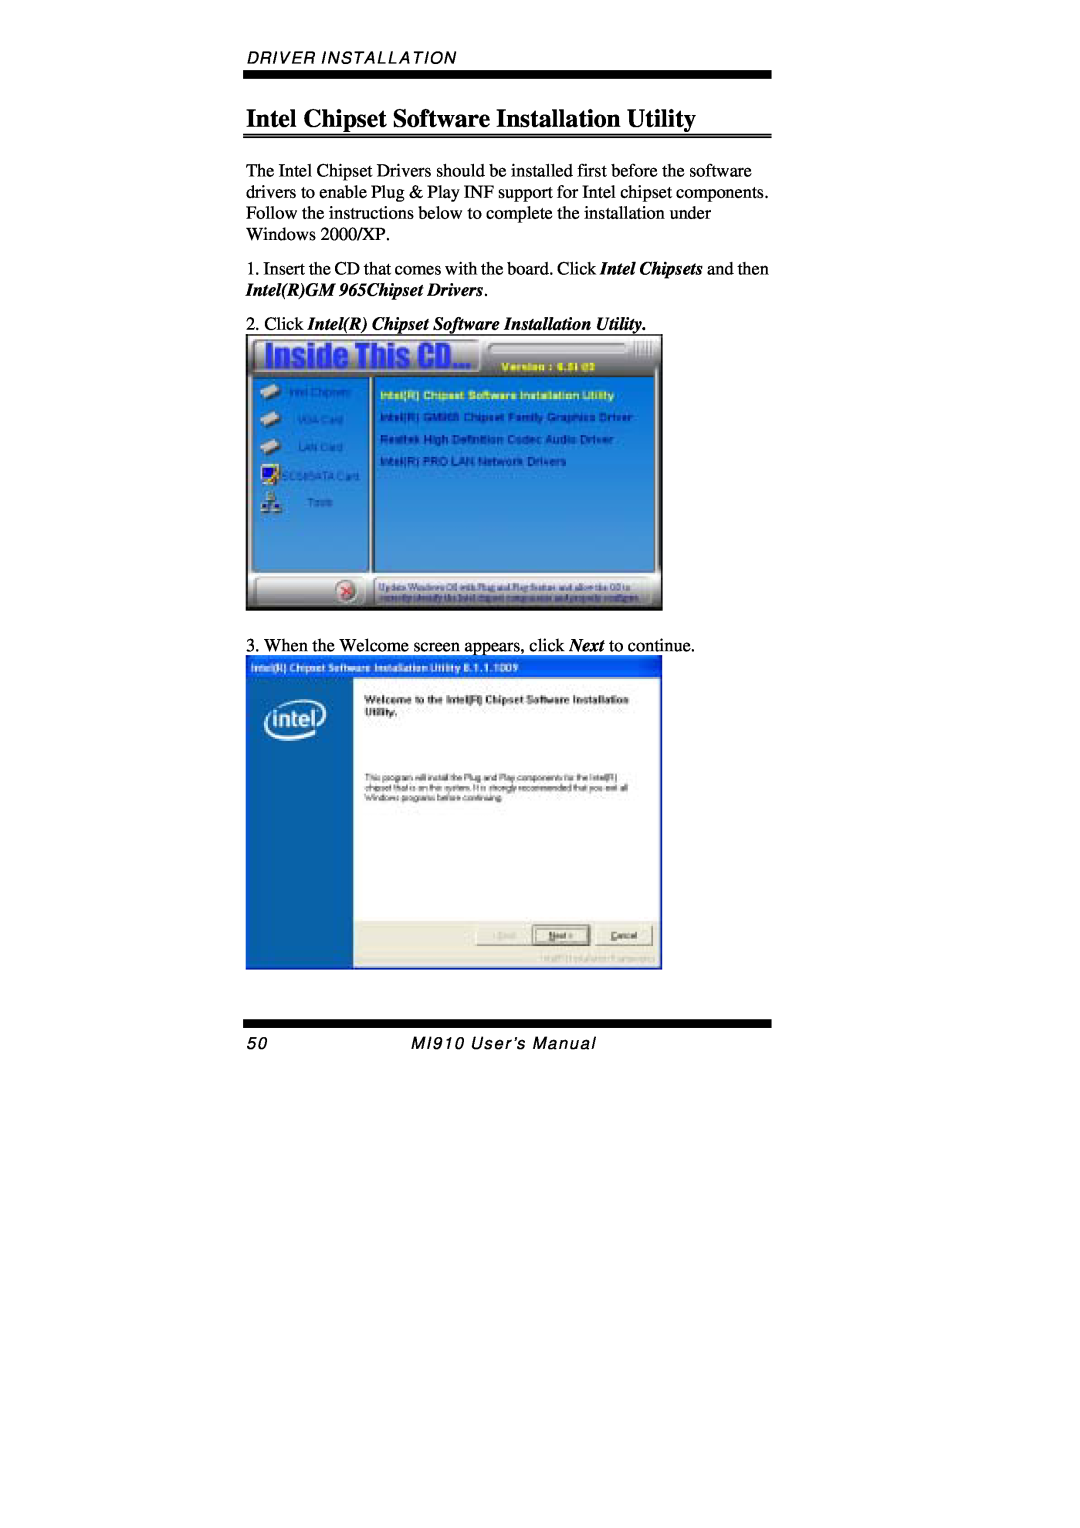 Intel MI910F user manual Intel Chipset Software Installation Utility, Driver Installation, MI910 User’s Manual 